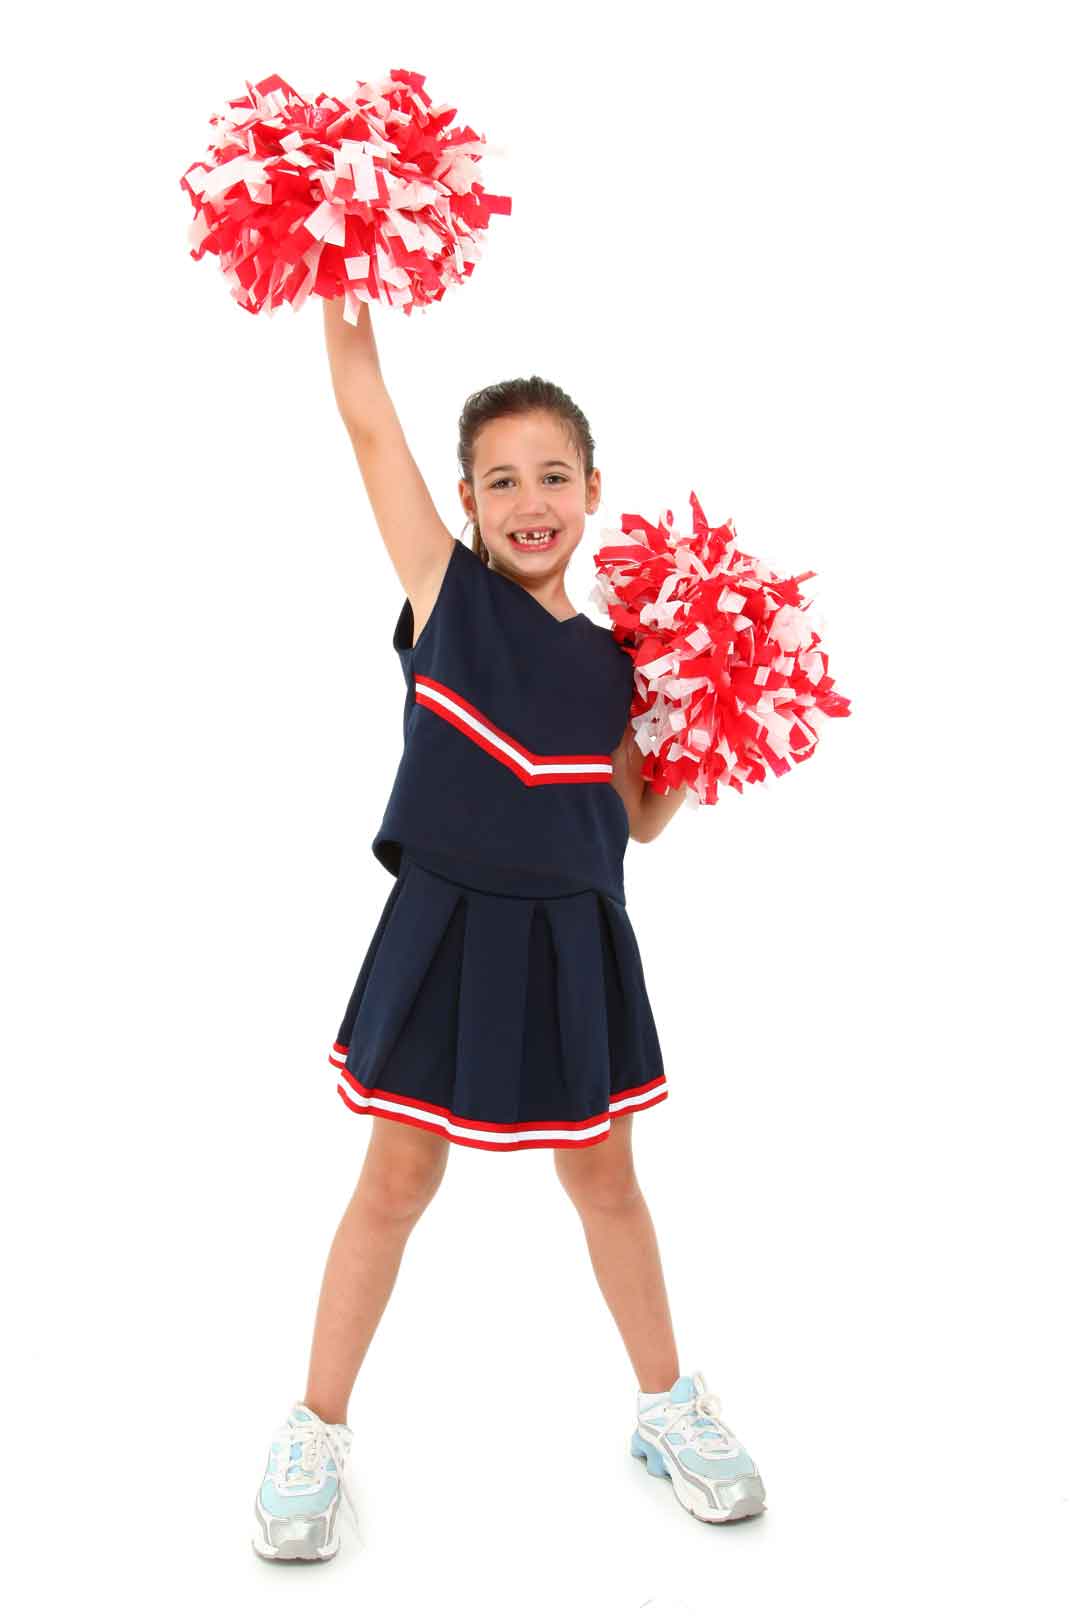 Holly Stampede Youth Cheerleader